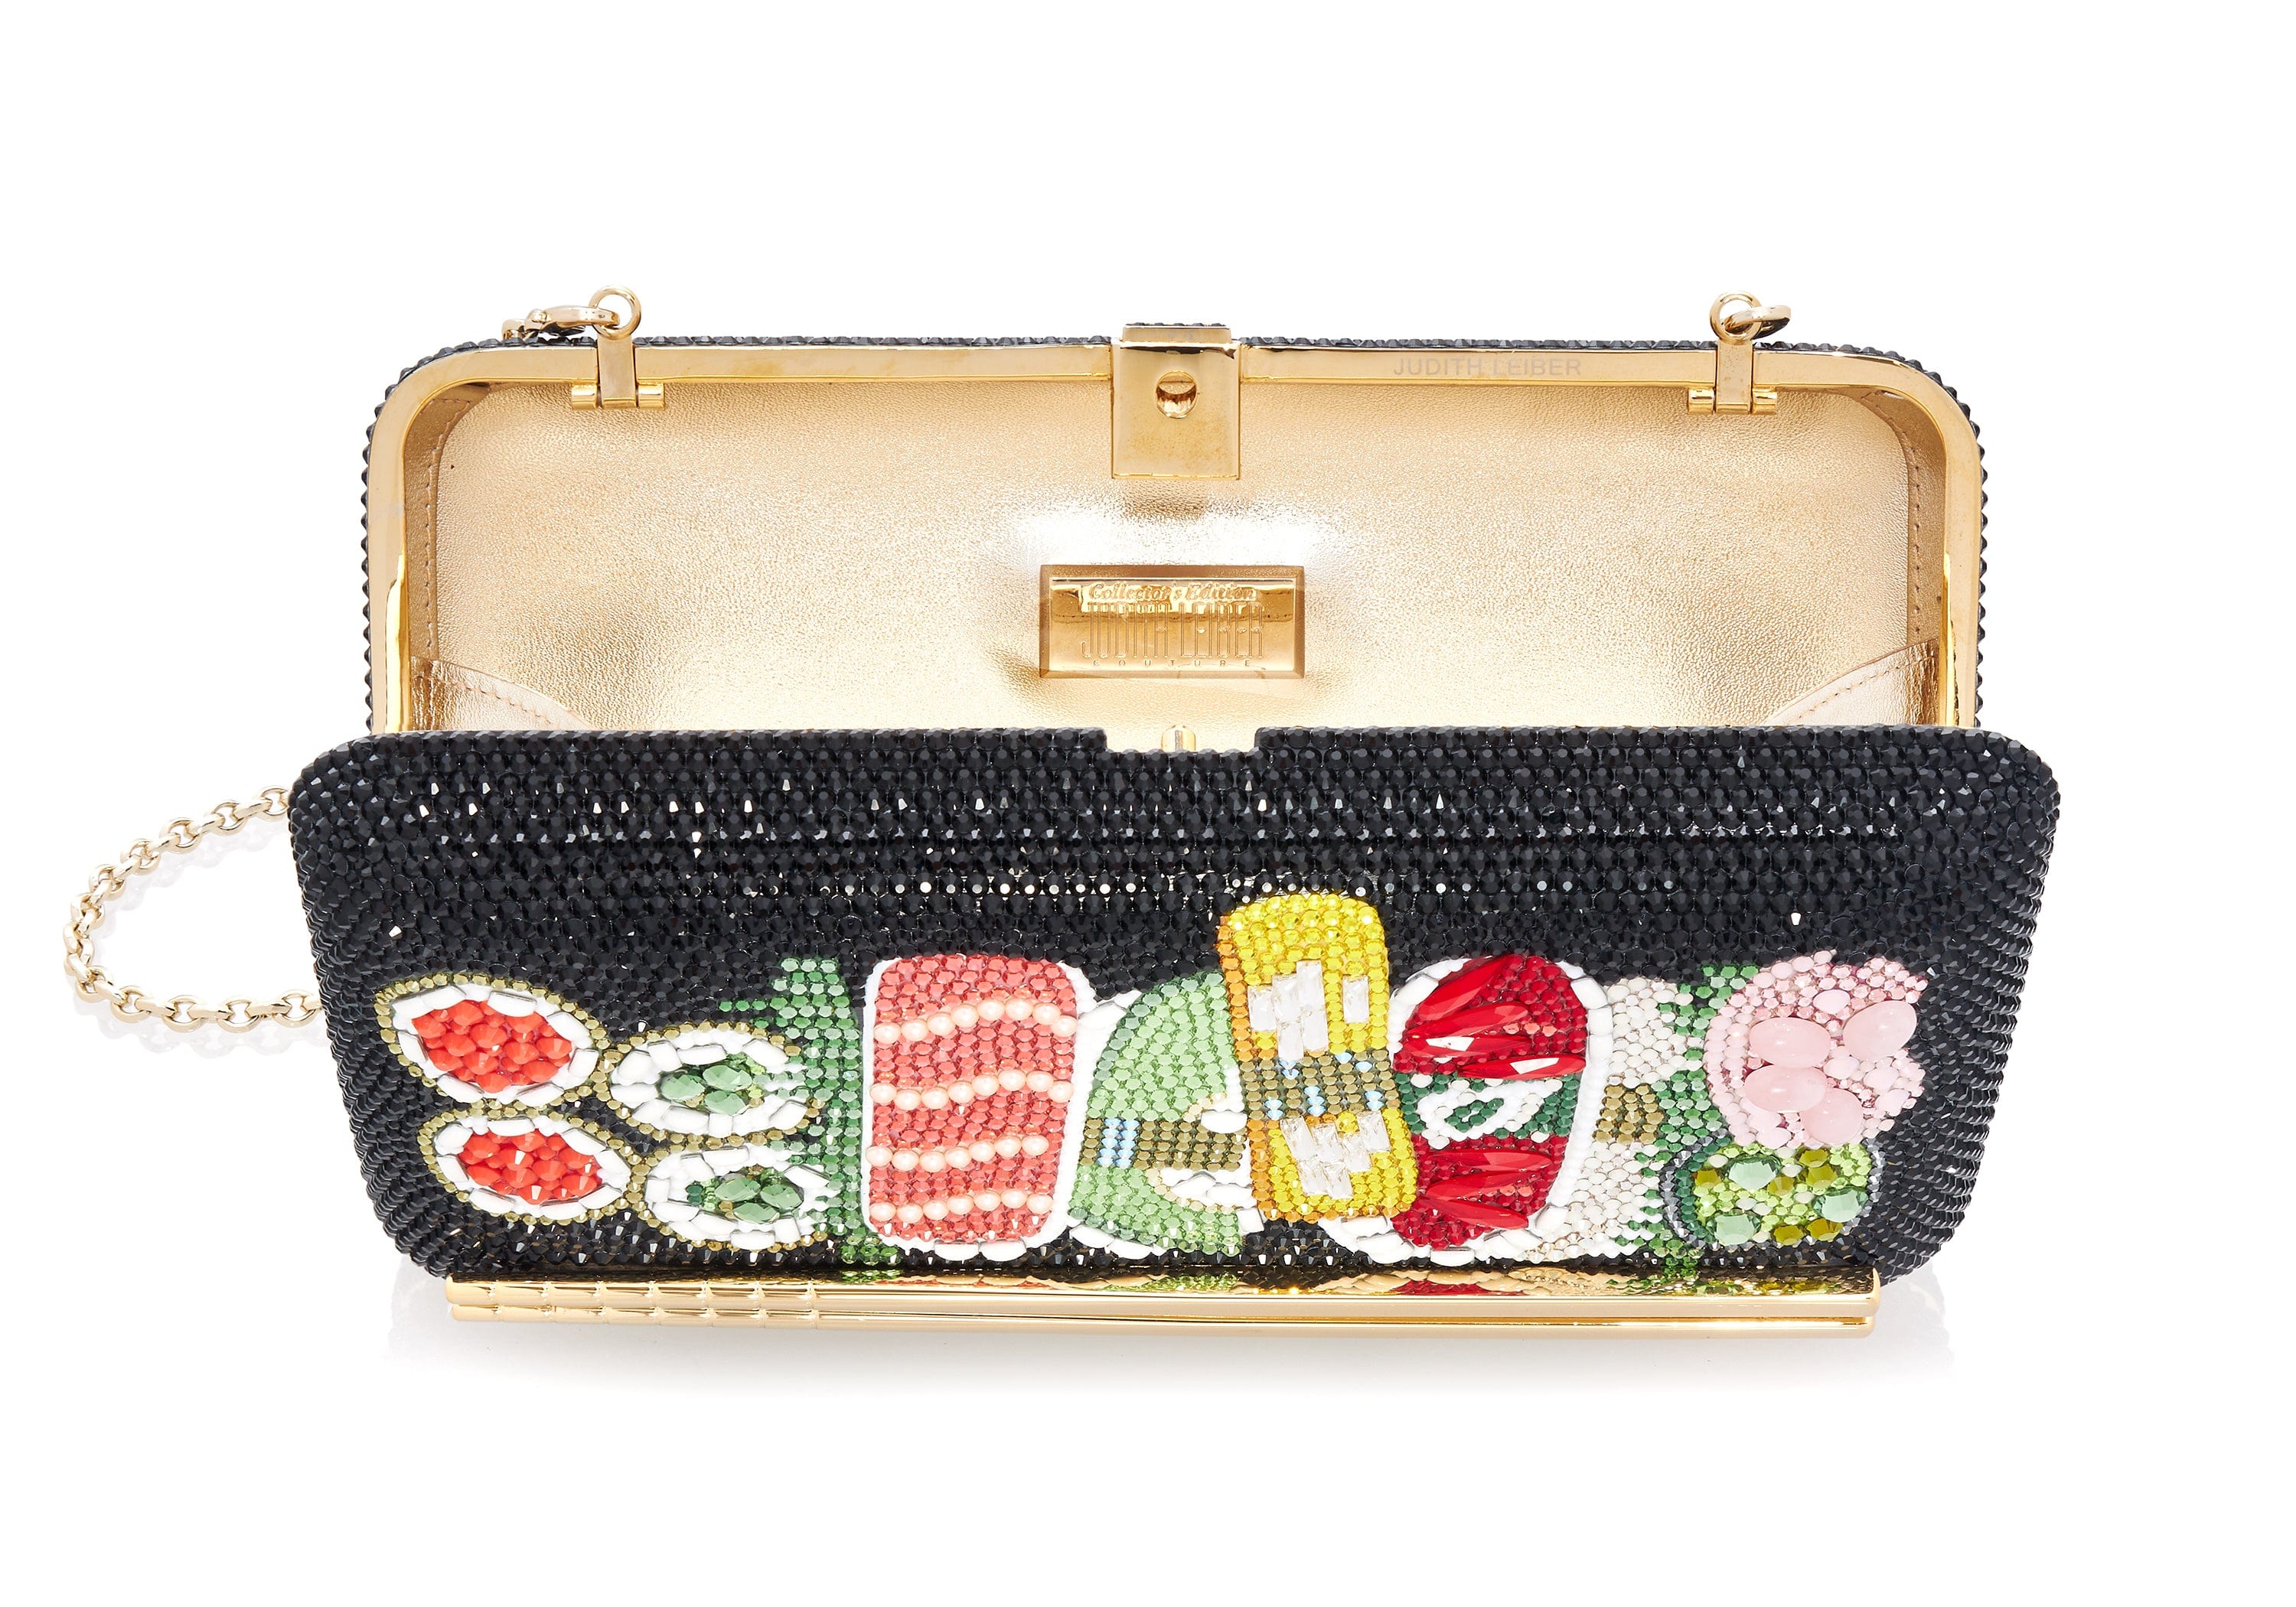 Judith Leiber Pop-Inspired Handbags - Taubman Museum of Art